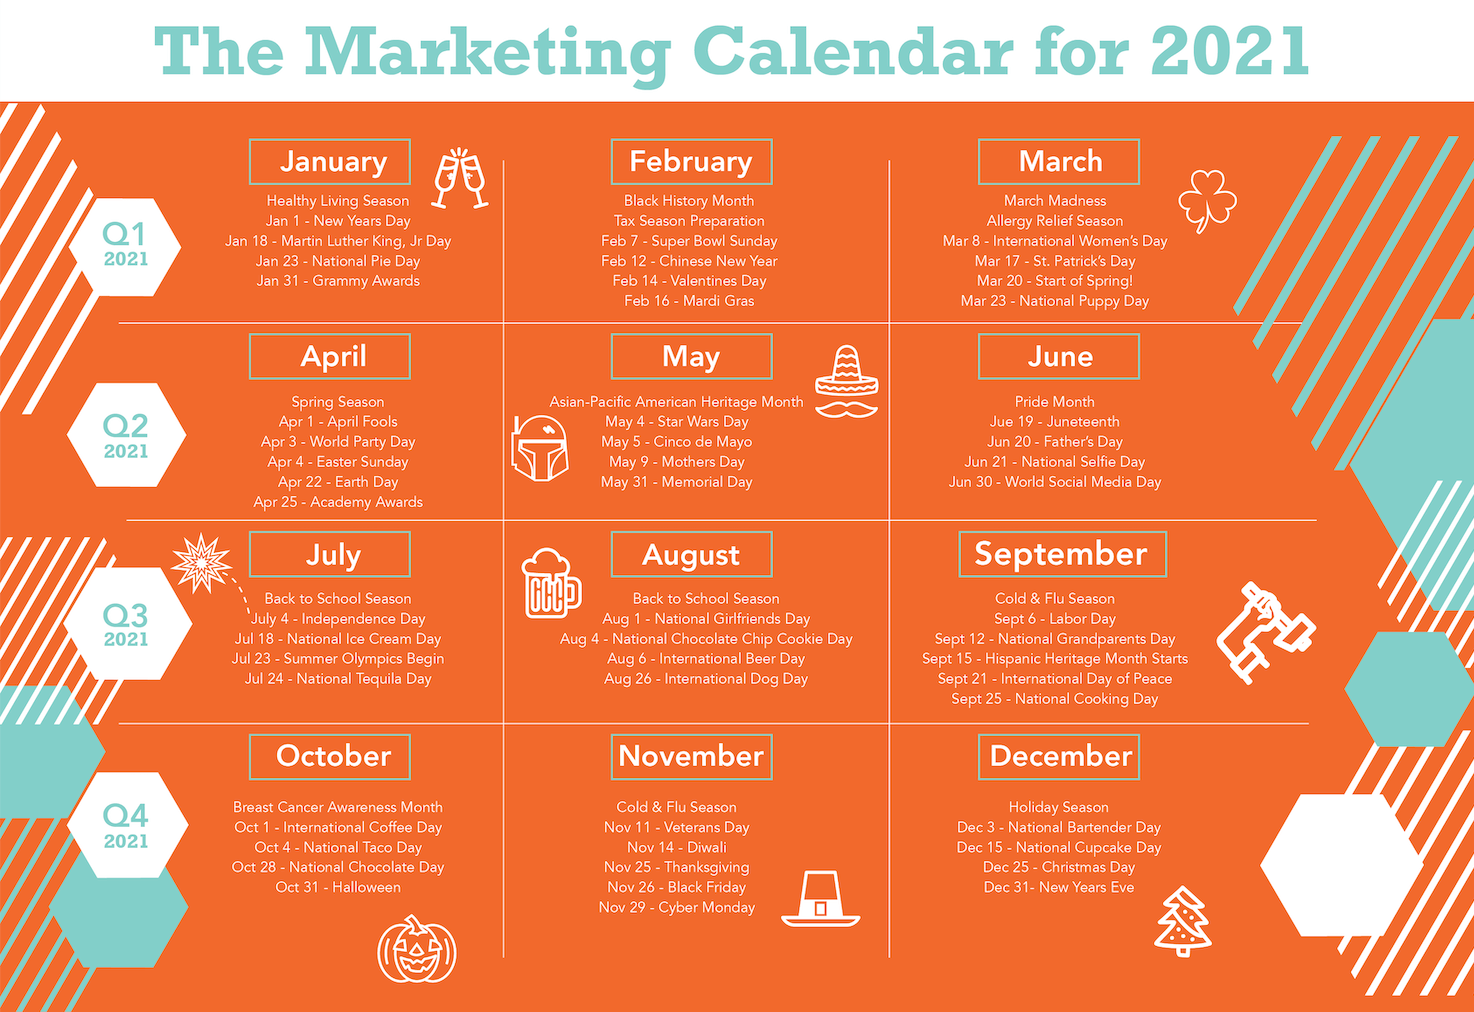 The 2021 Marketing Calendar